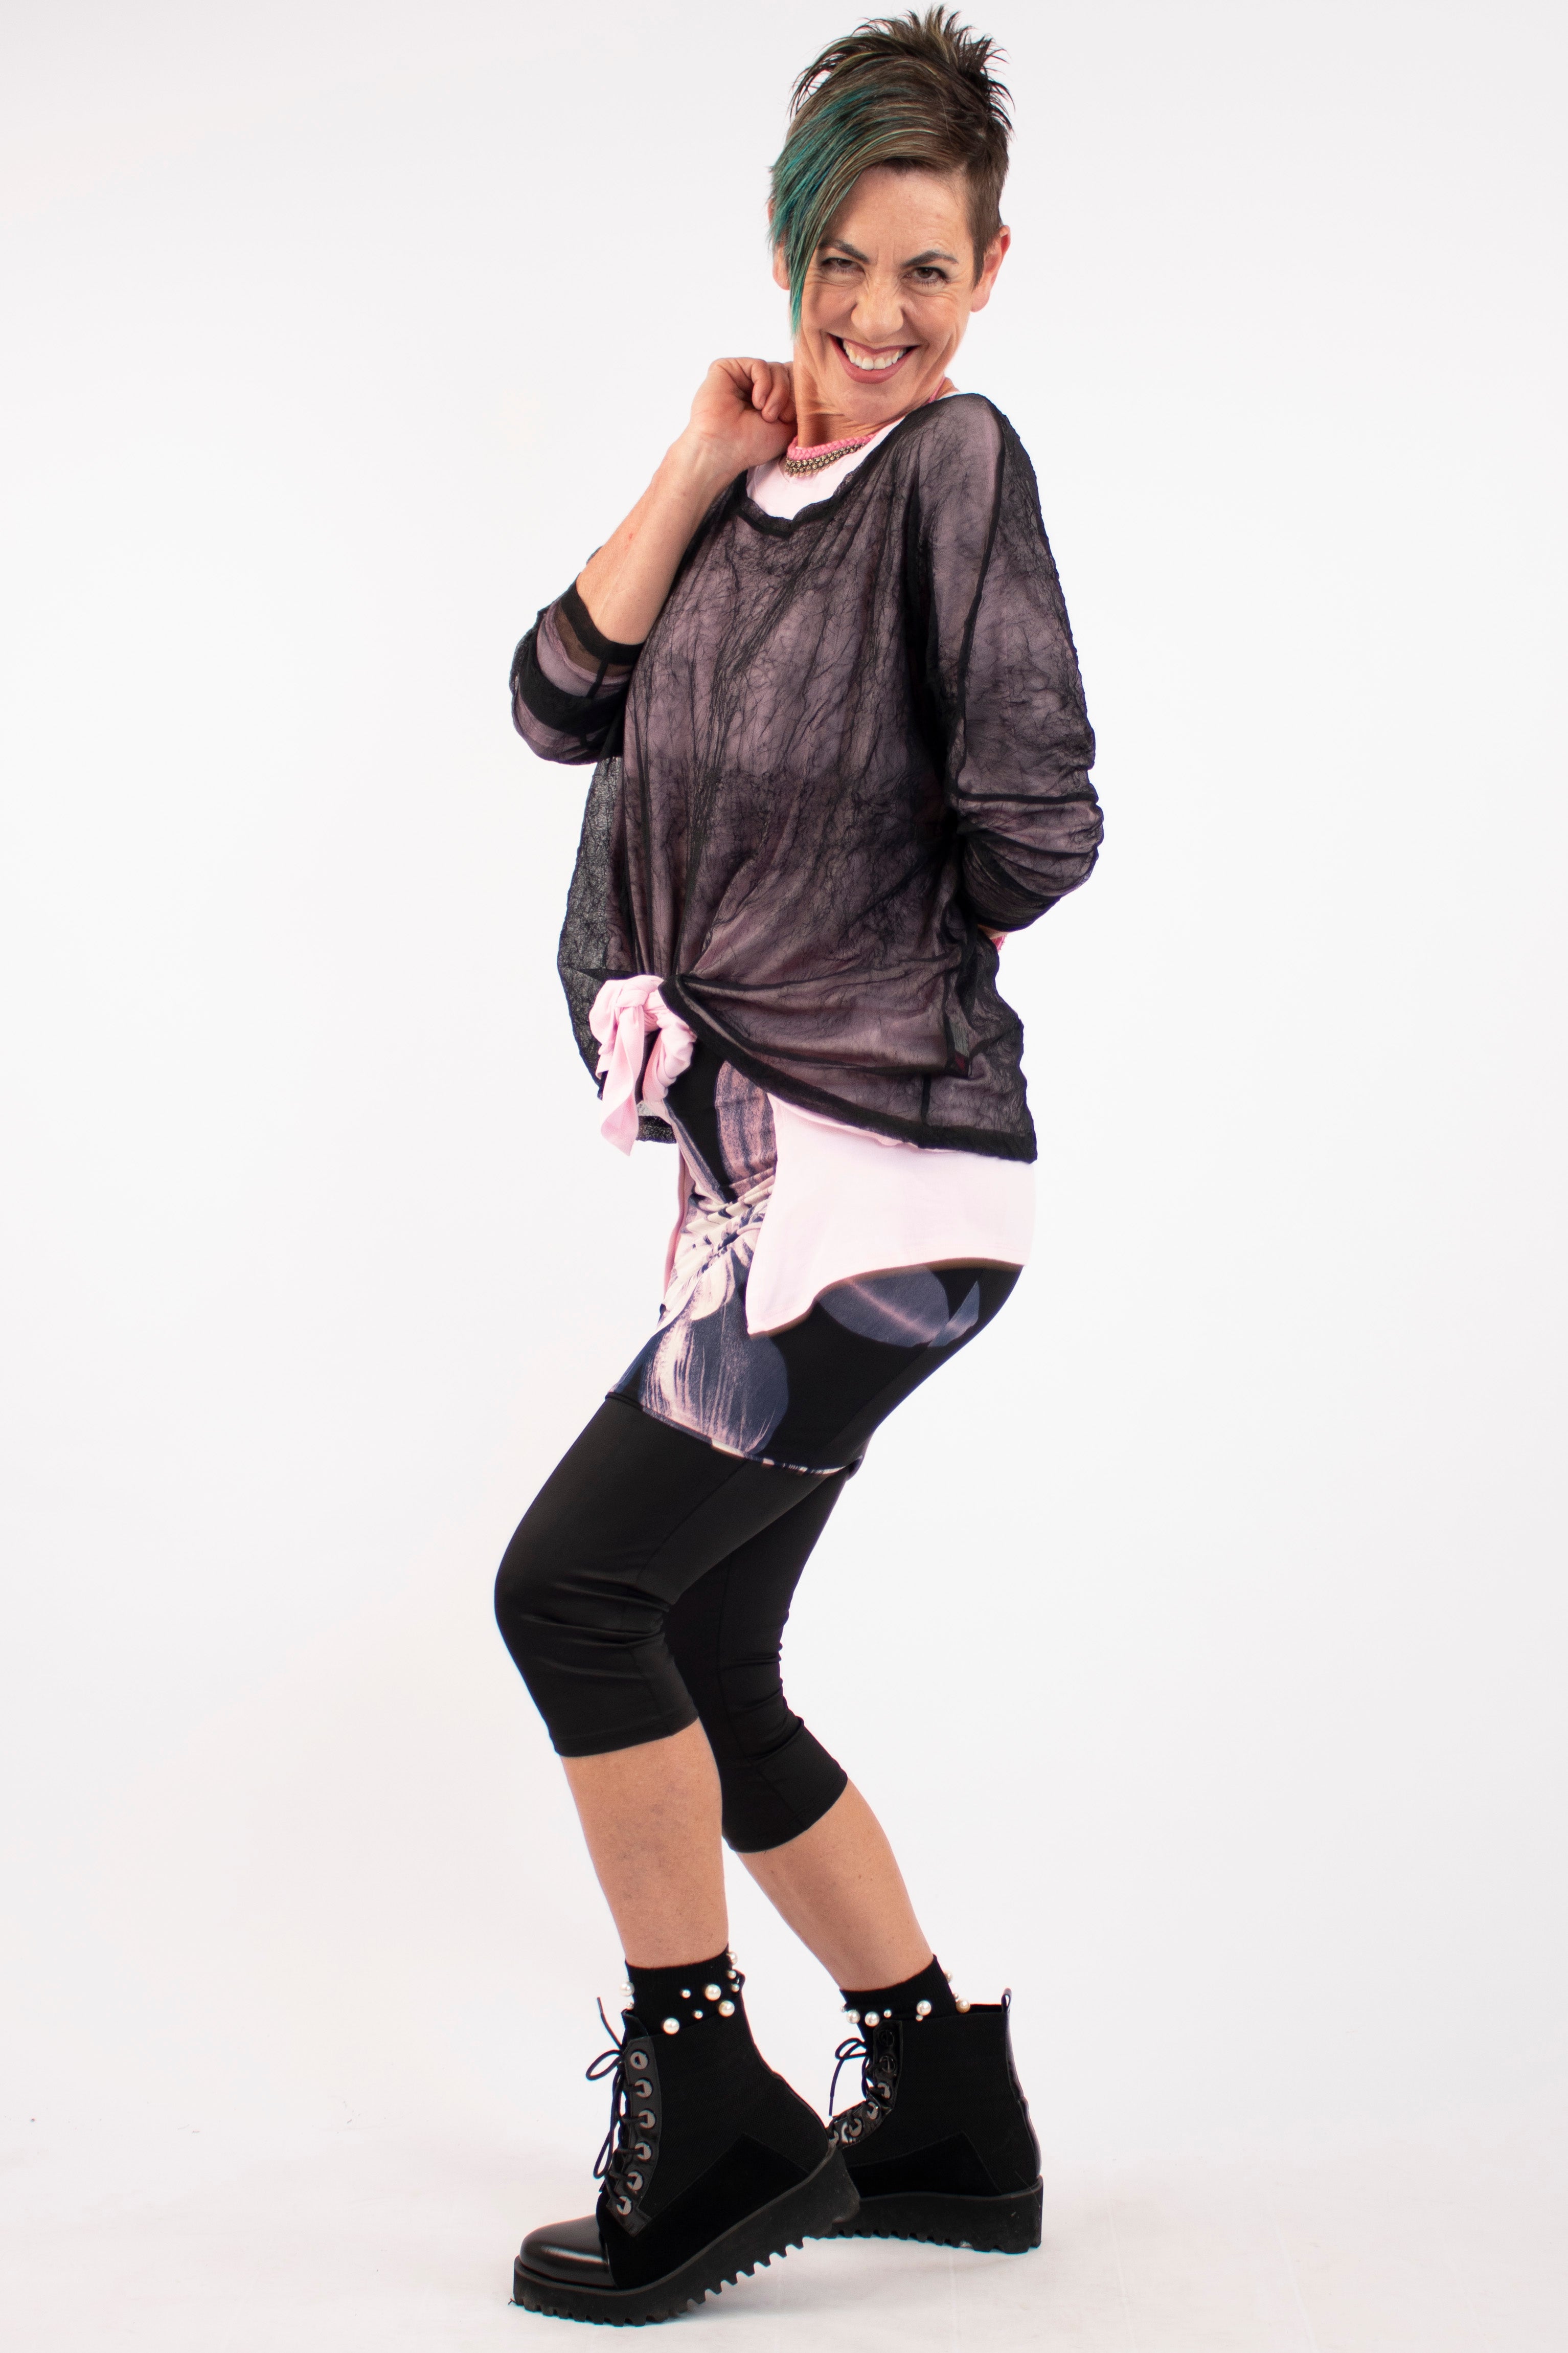 active-wear-women-over-40-fashion-over-50-active-wear-women-shop-online-australia-sports-skirt